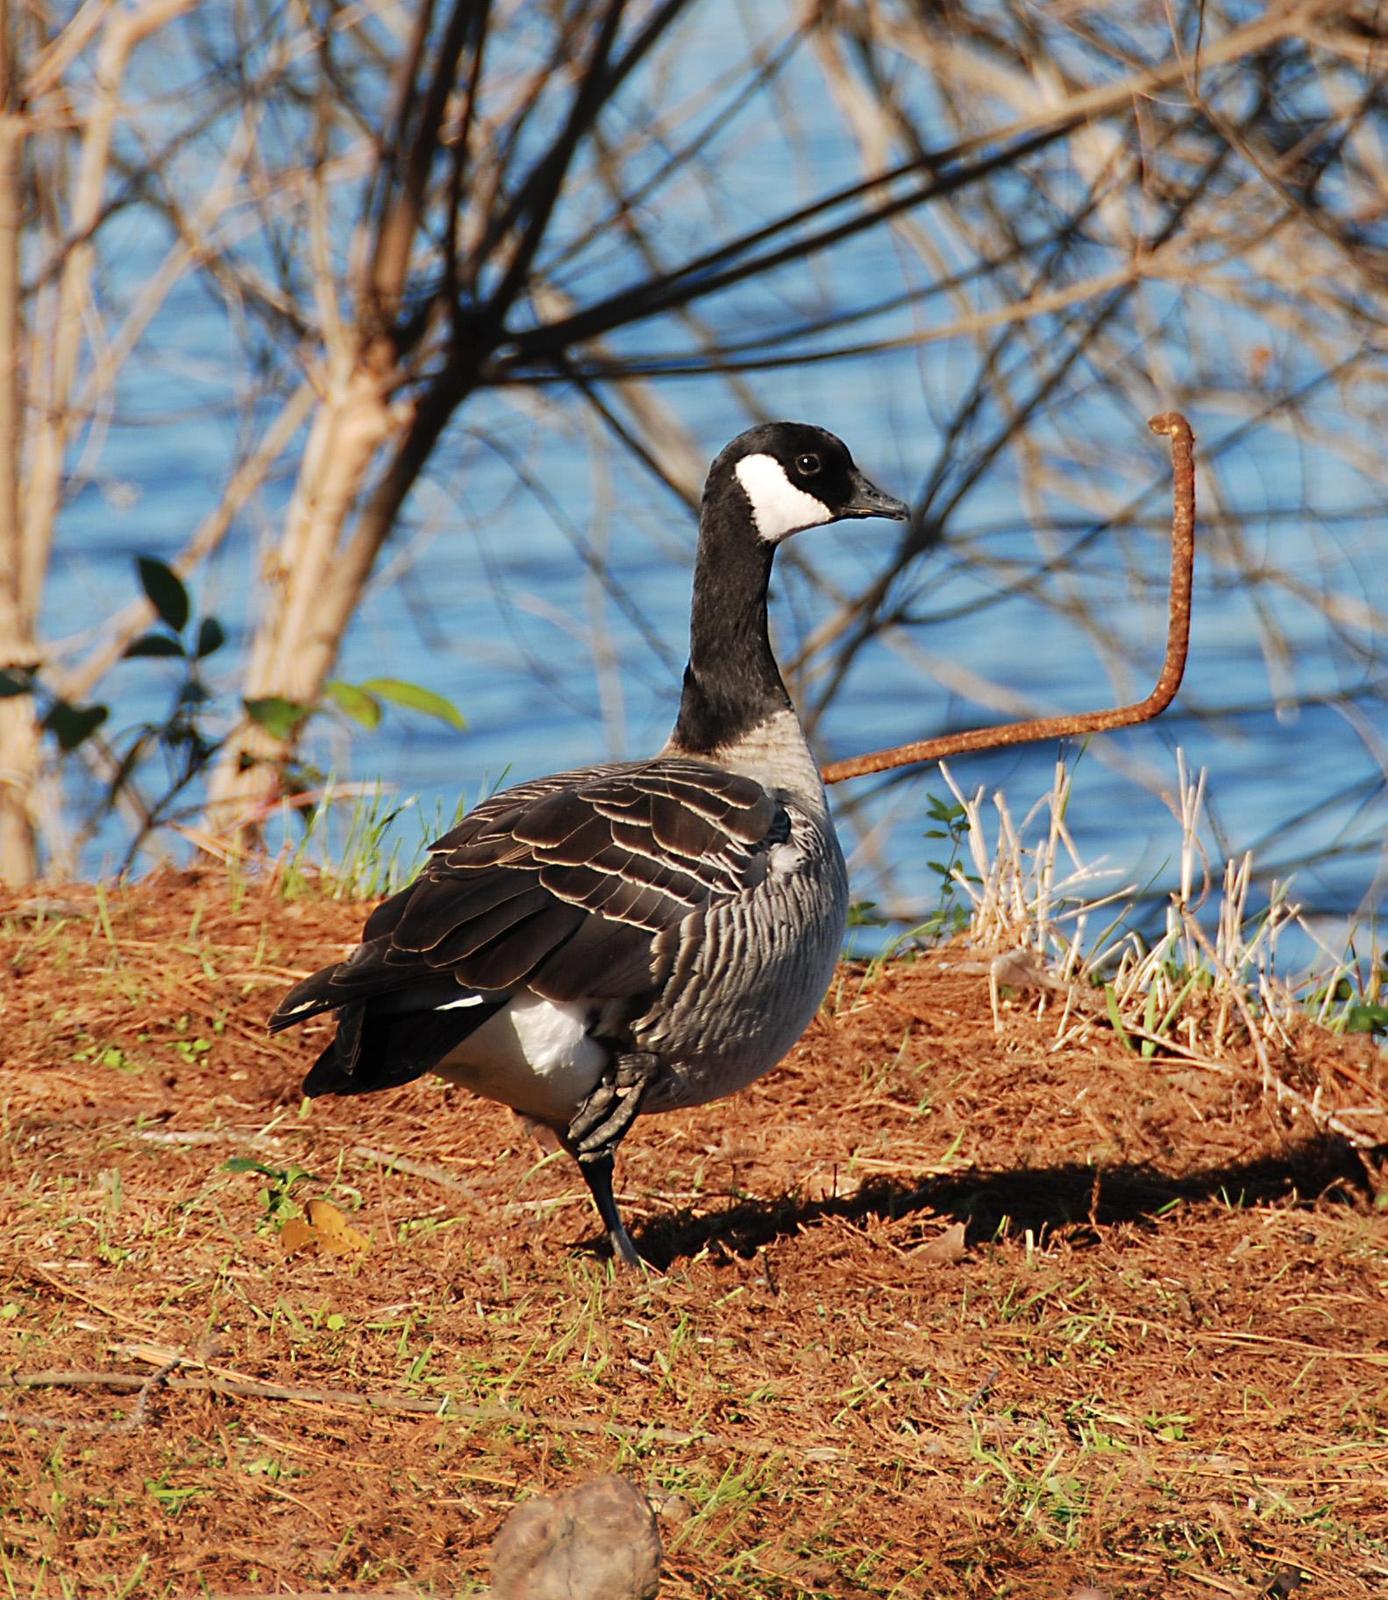 Cackling Goose Photo by Carol Foil